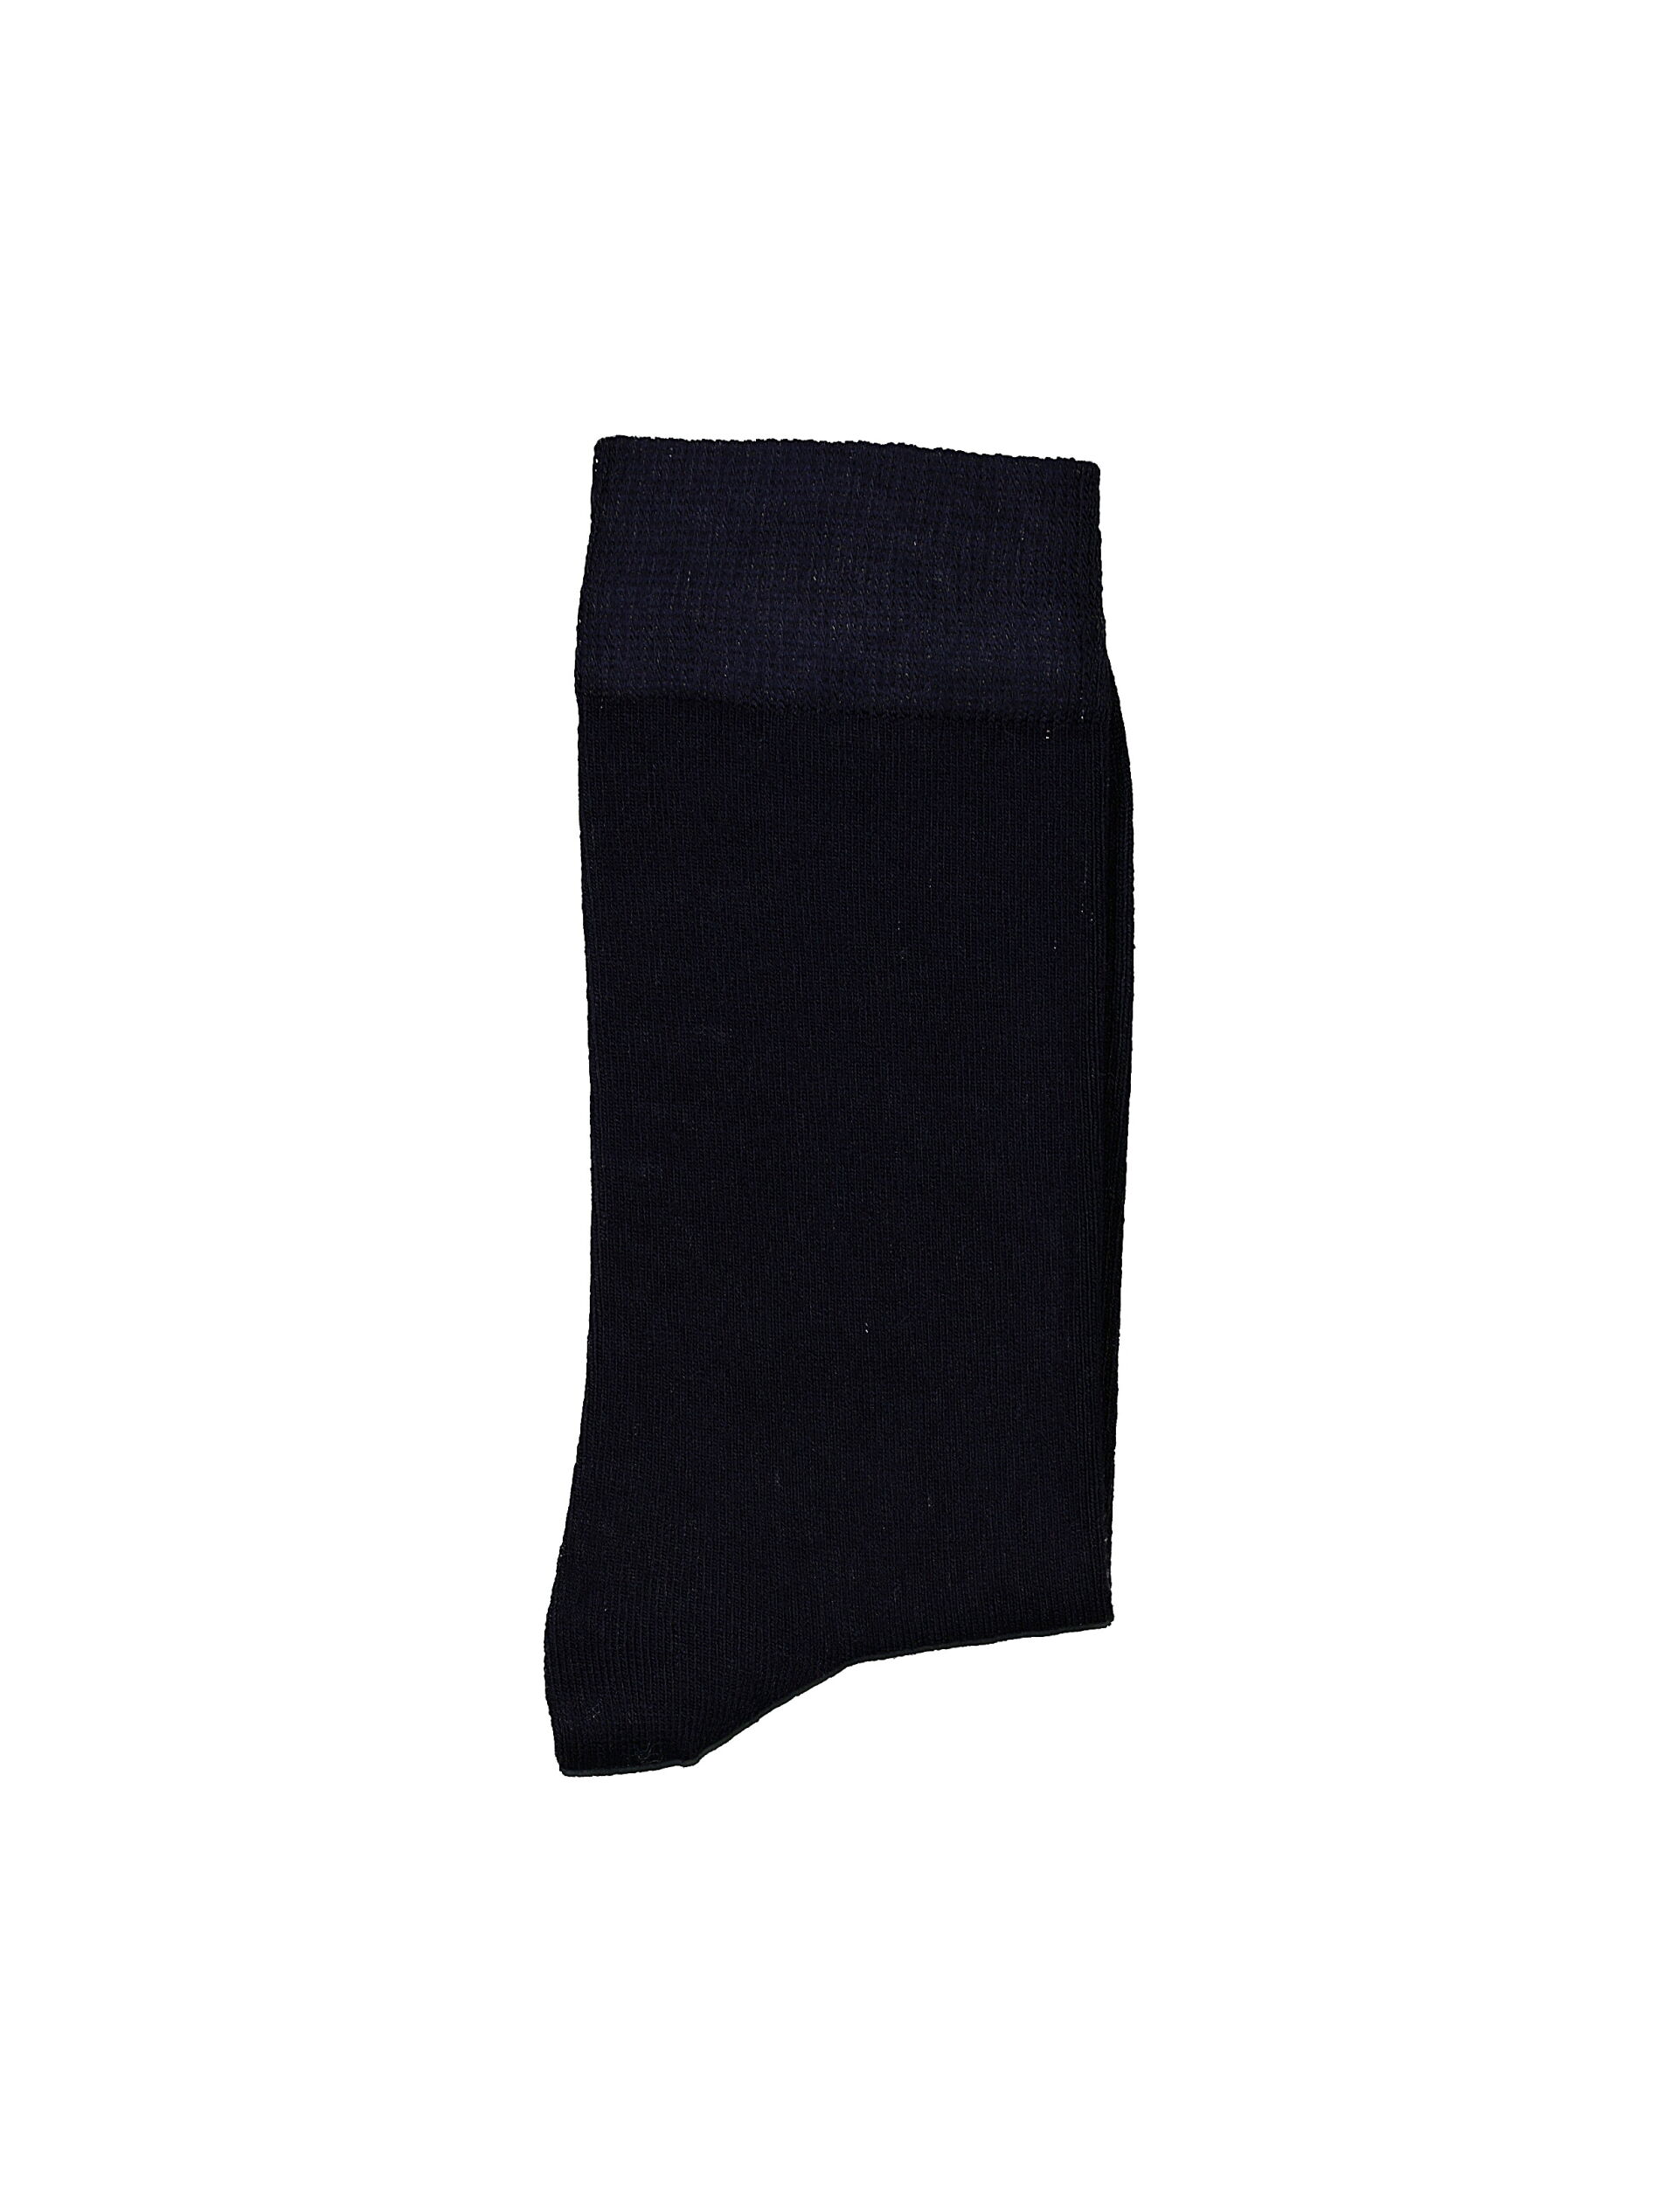 Socks 30-991050